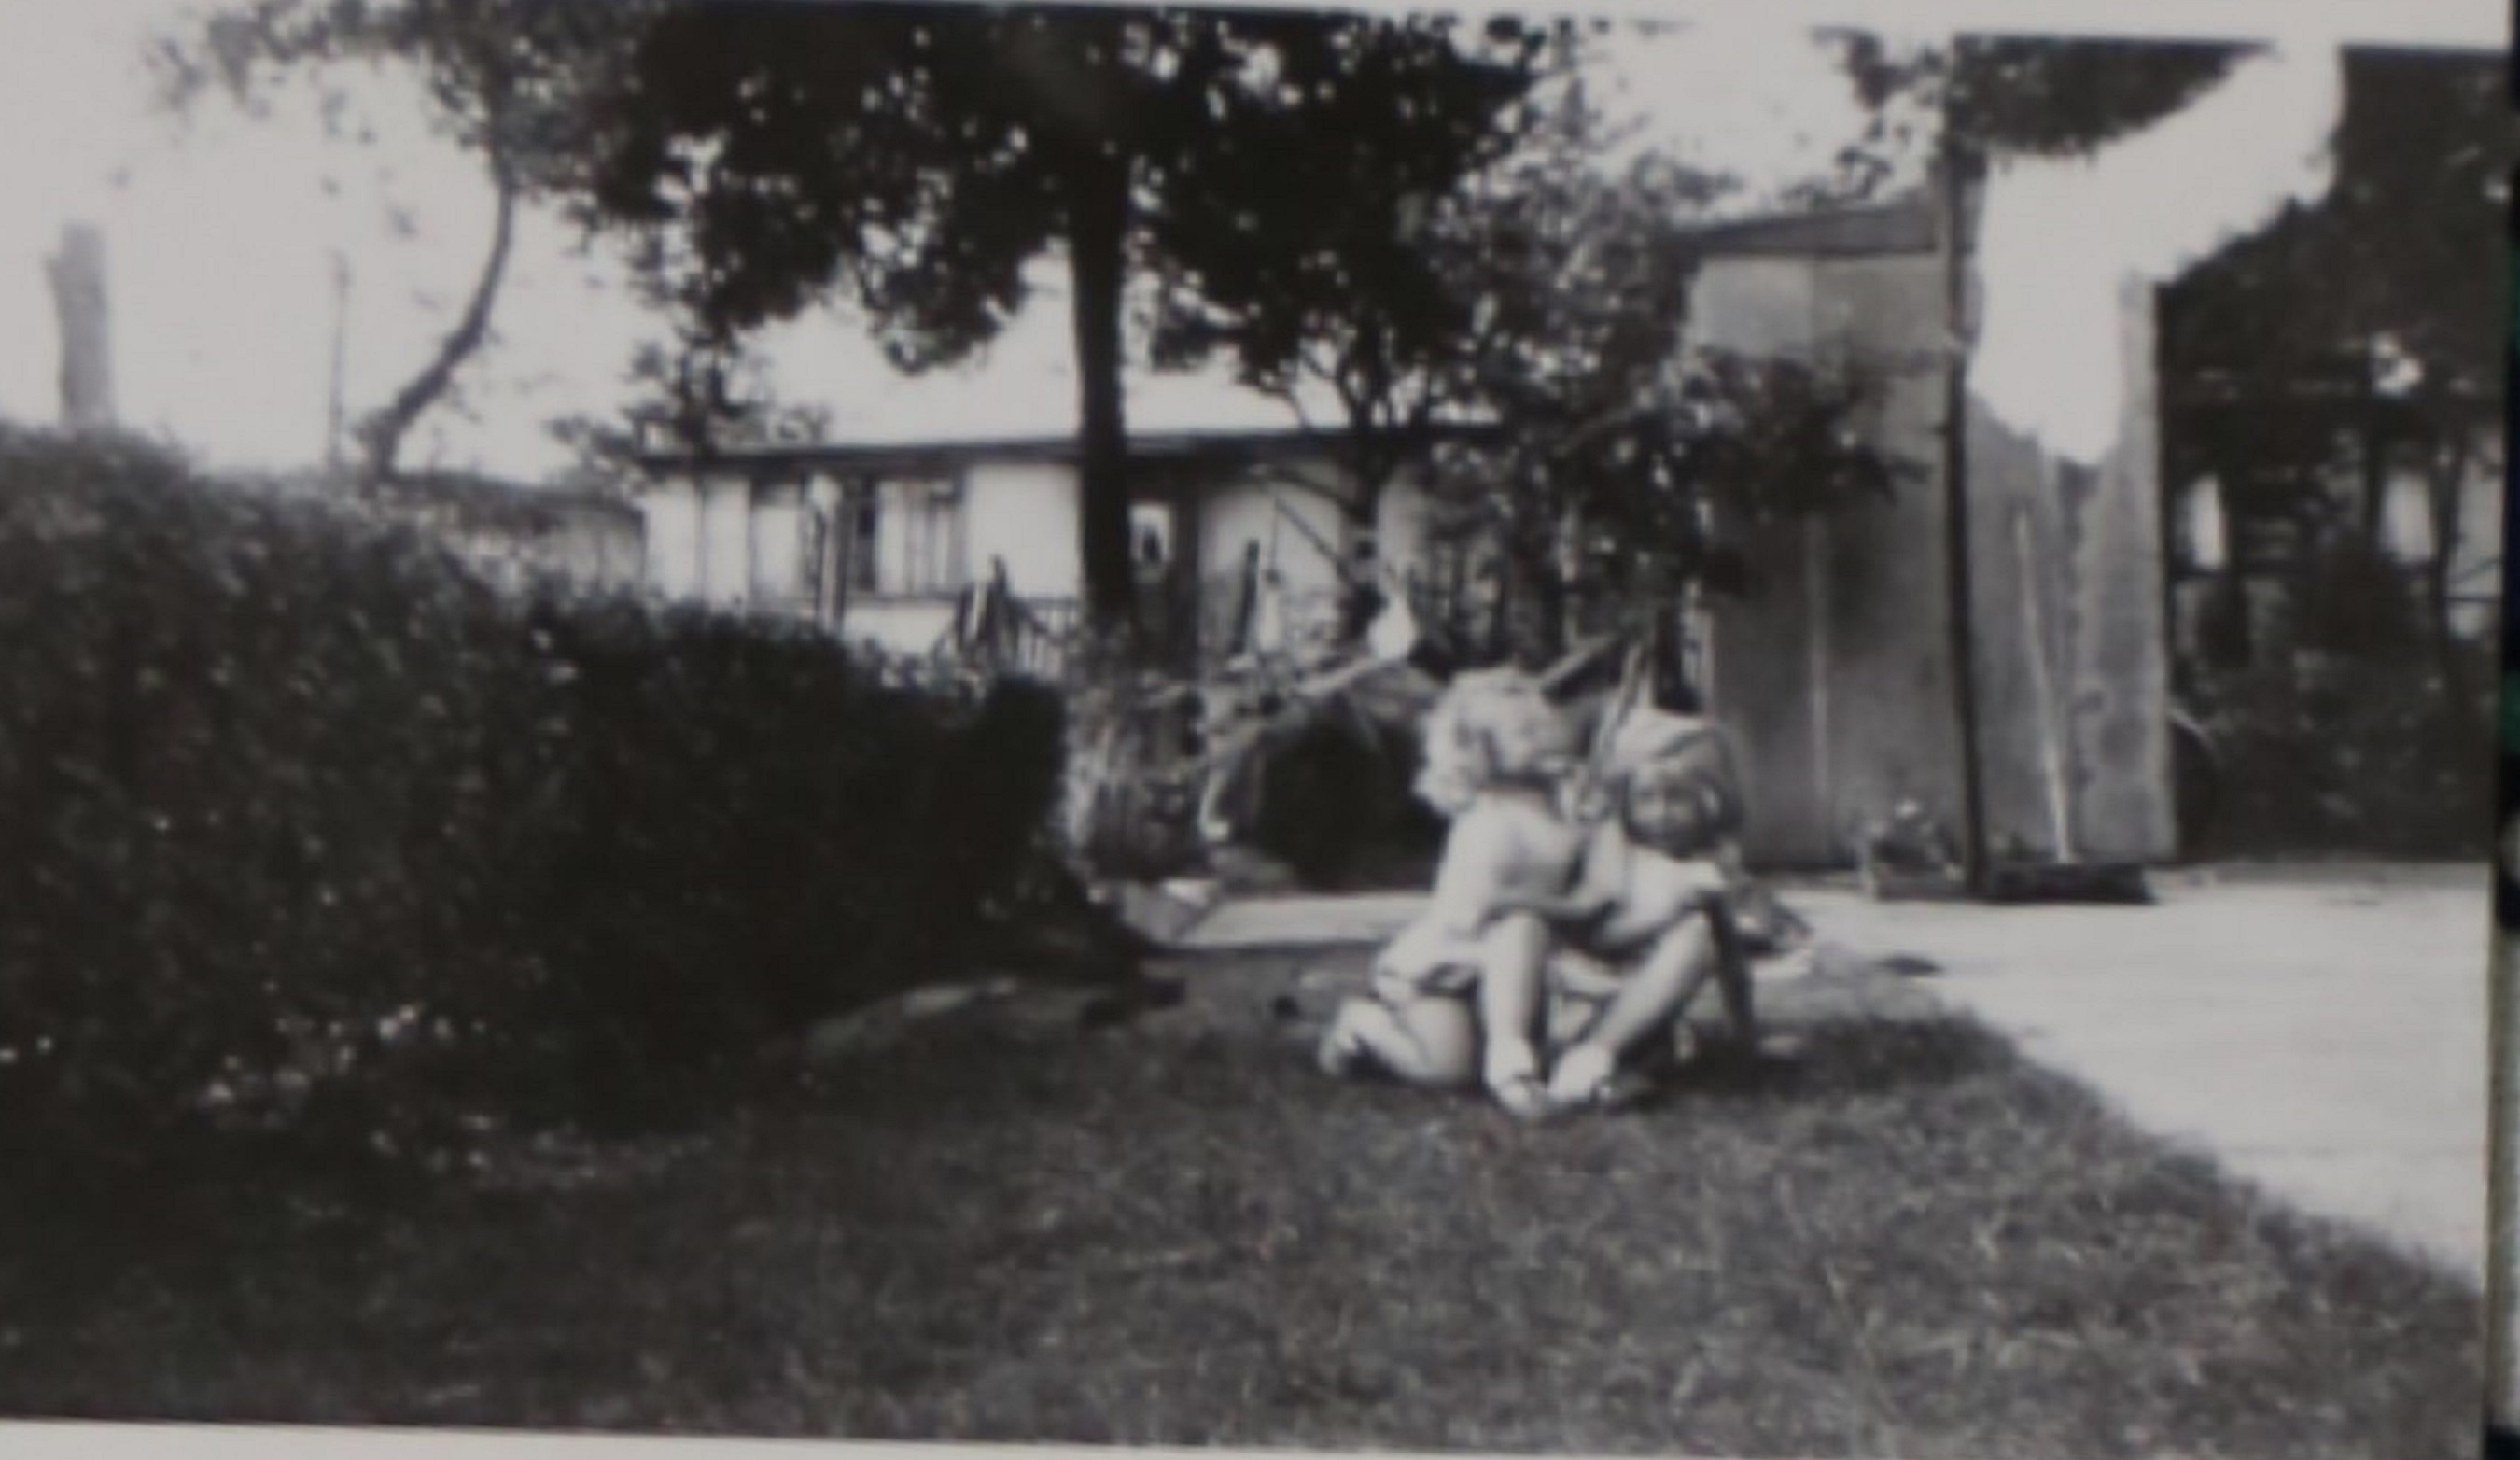 Two small children in the prefab garden in Willesden